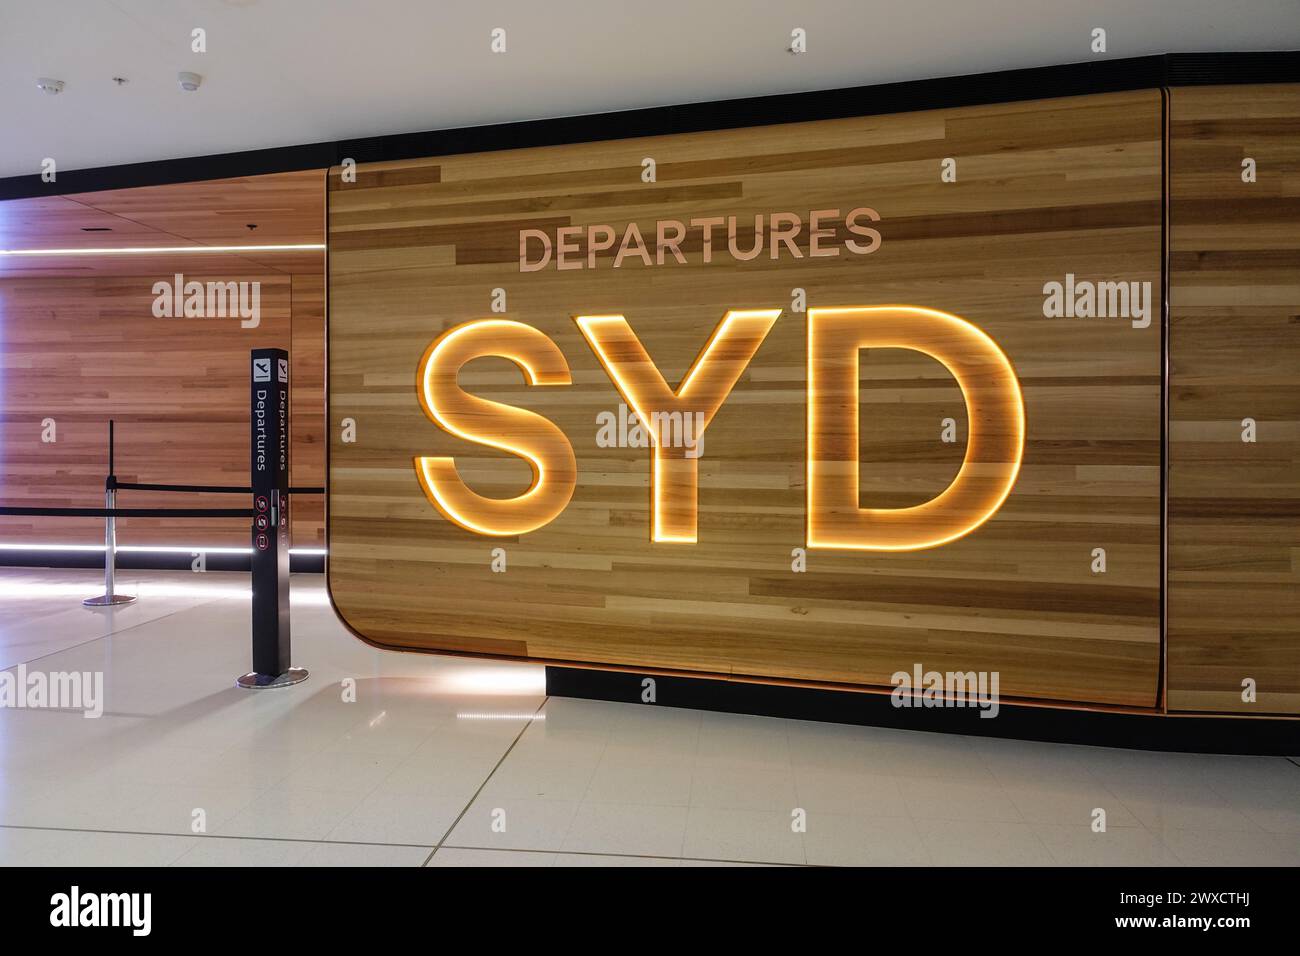 sydney airport departures area Stock Photo